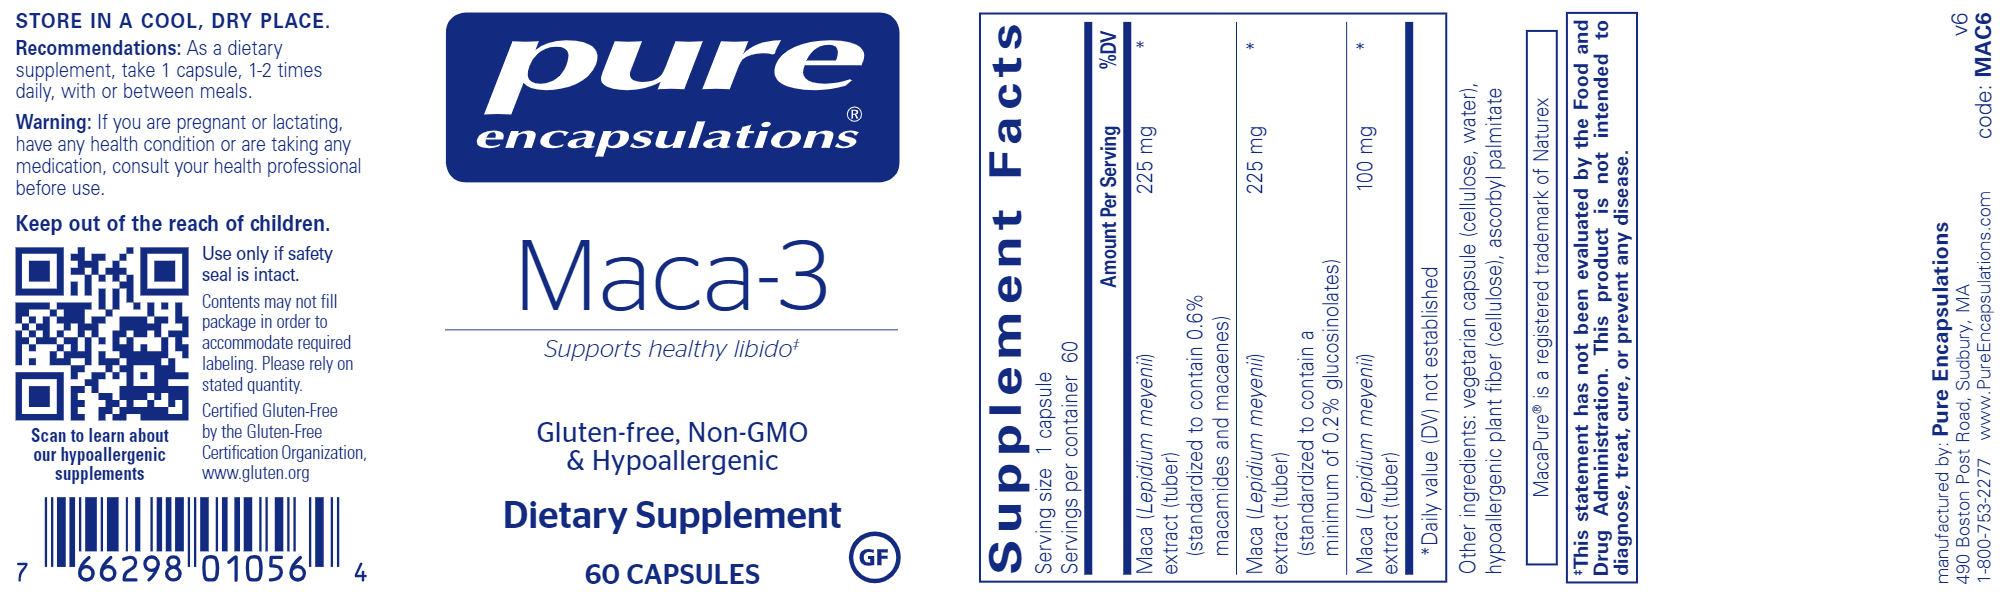 Maca-3 60 caps label ingredients